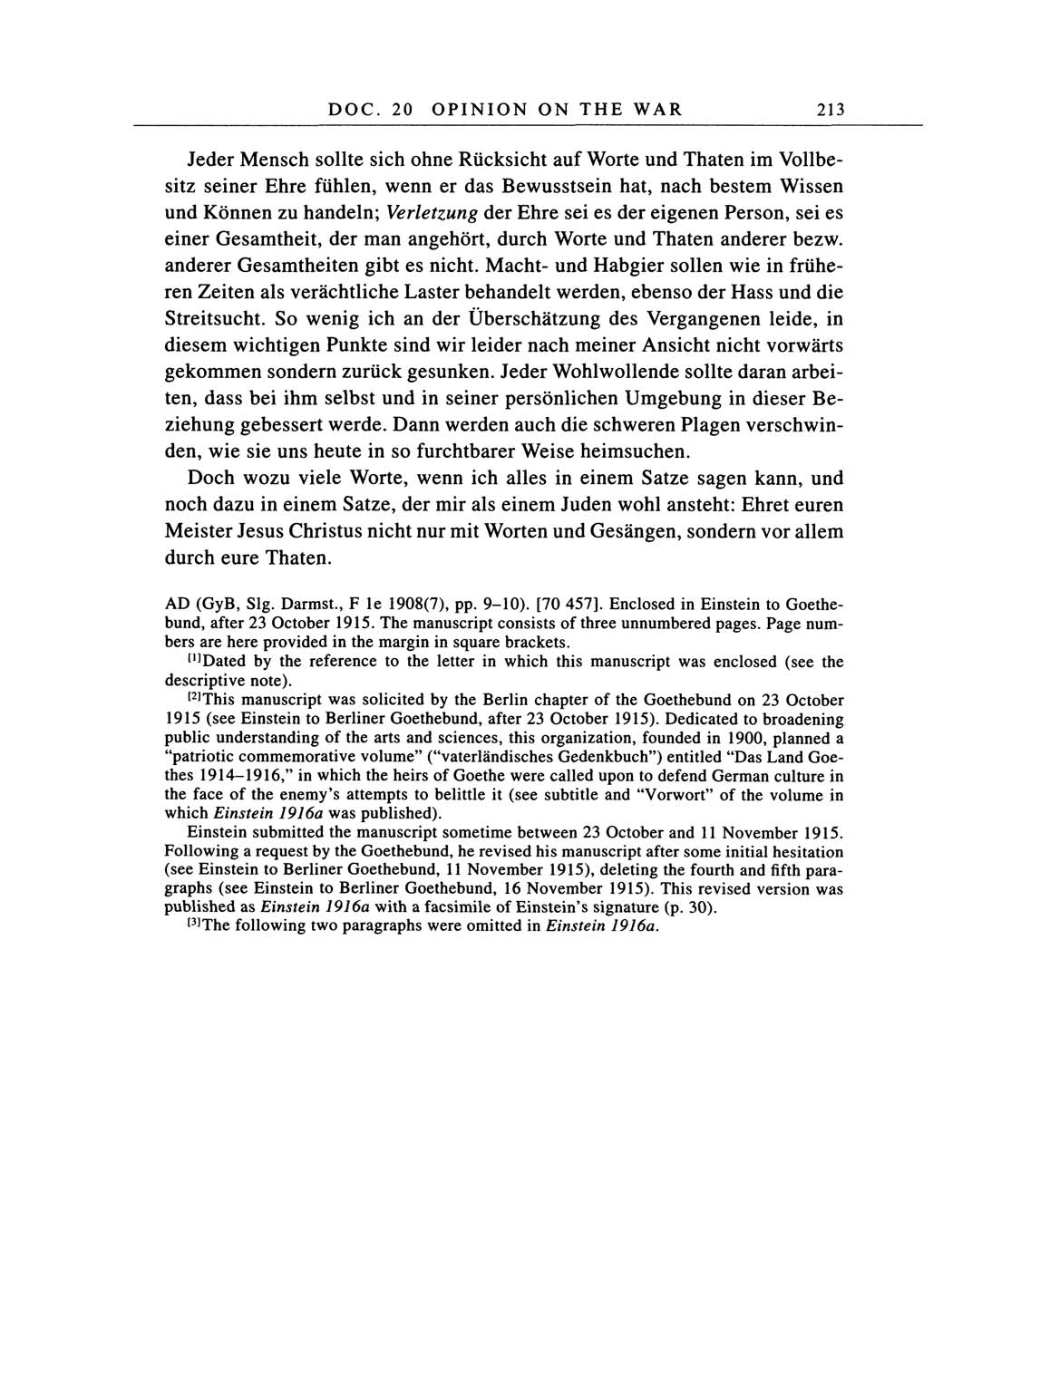 Volume 6: The Berlin Years: Writings, 1914-1917 page 213